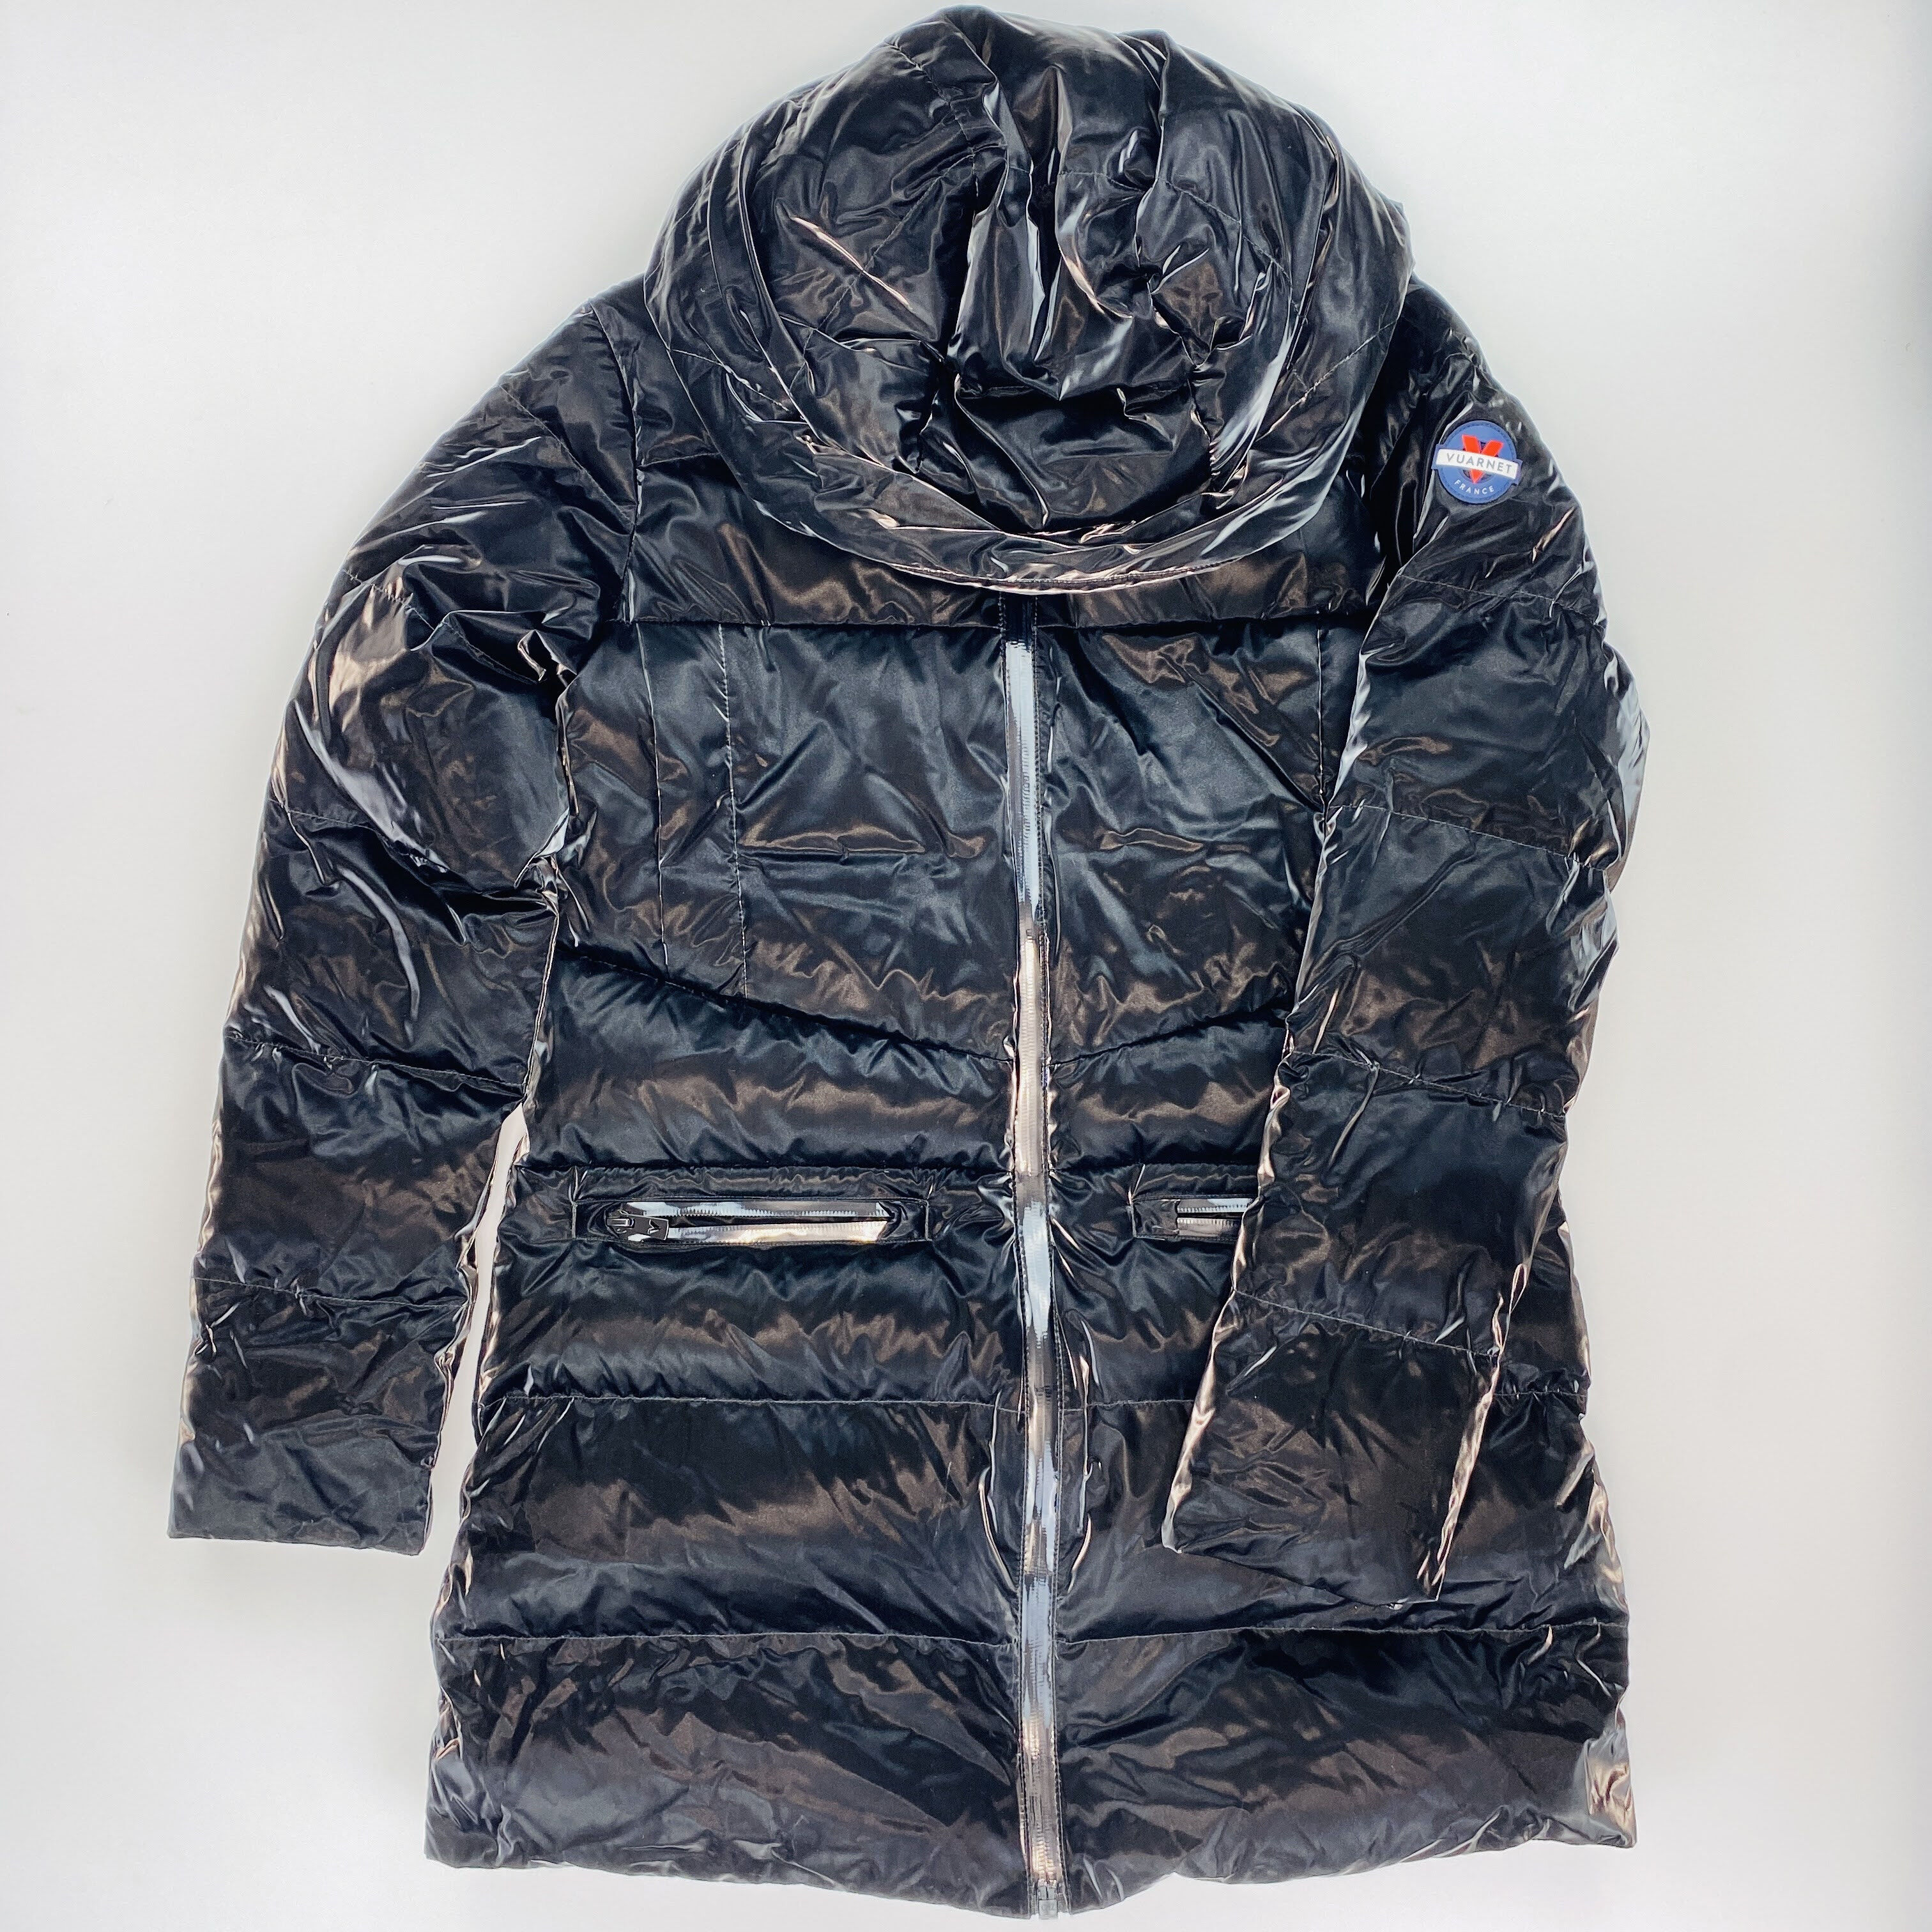 Vuarnet Balhas Jacket - Second Hand Synthetic jacket - Women's - Black - S | Hardloop